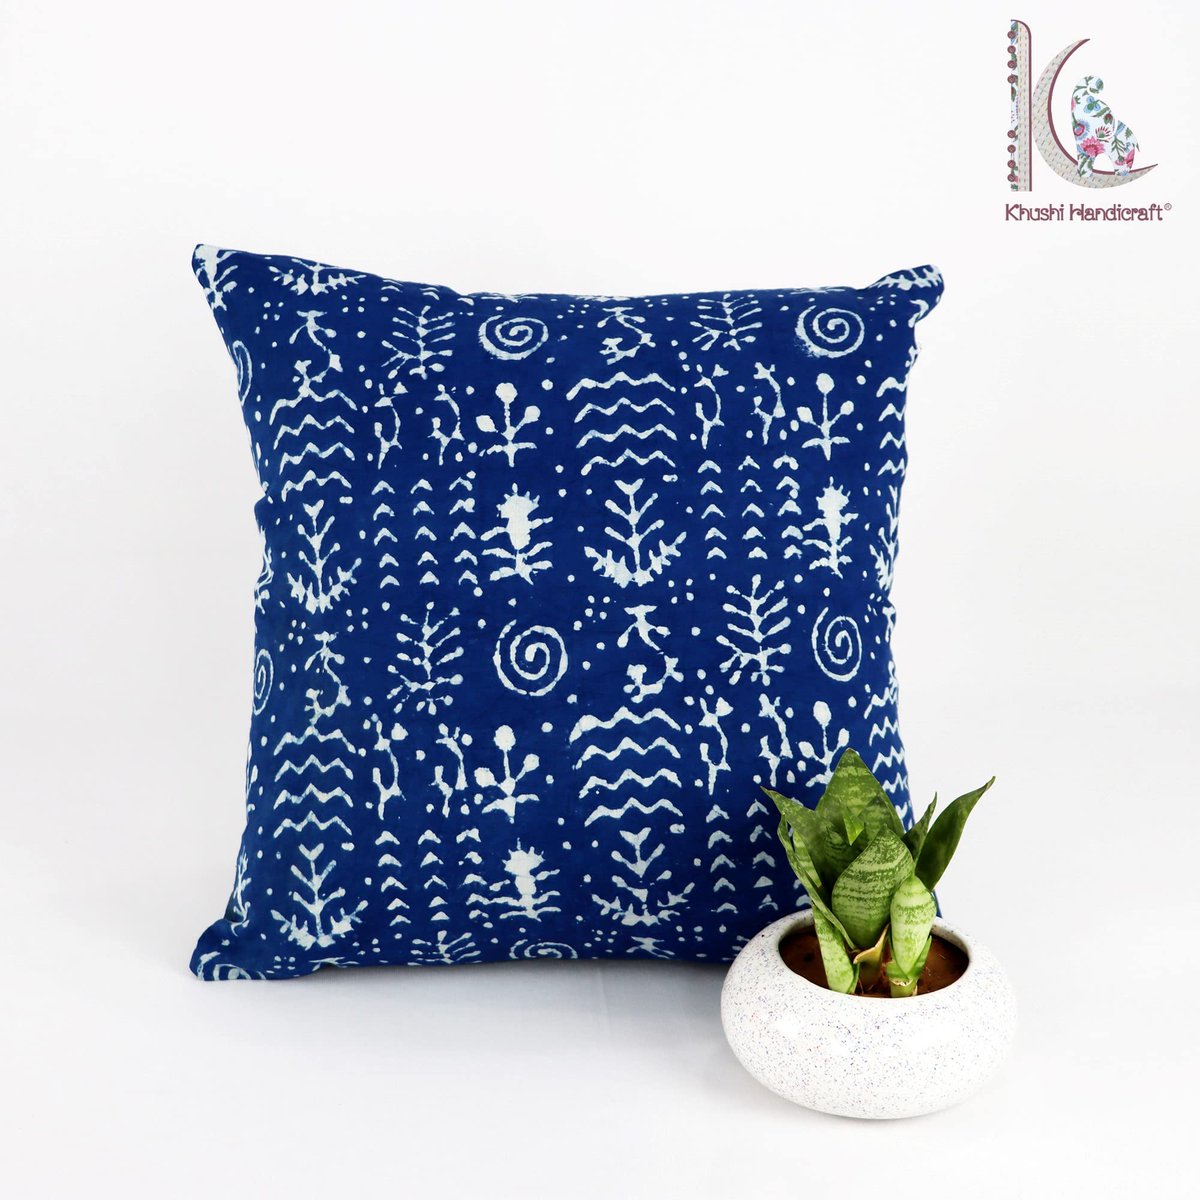 Cushion Cover
#cushioncover #pillow #pillowcase 
#khushihandicraft #blockprinte #handcrafted #handblockprinted #blockprint #cottonkurti #handmade  Mobile No. +917014909043